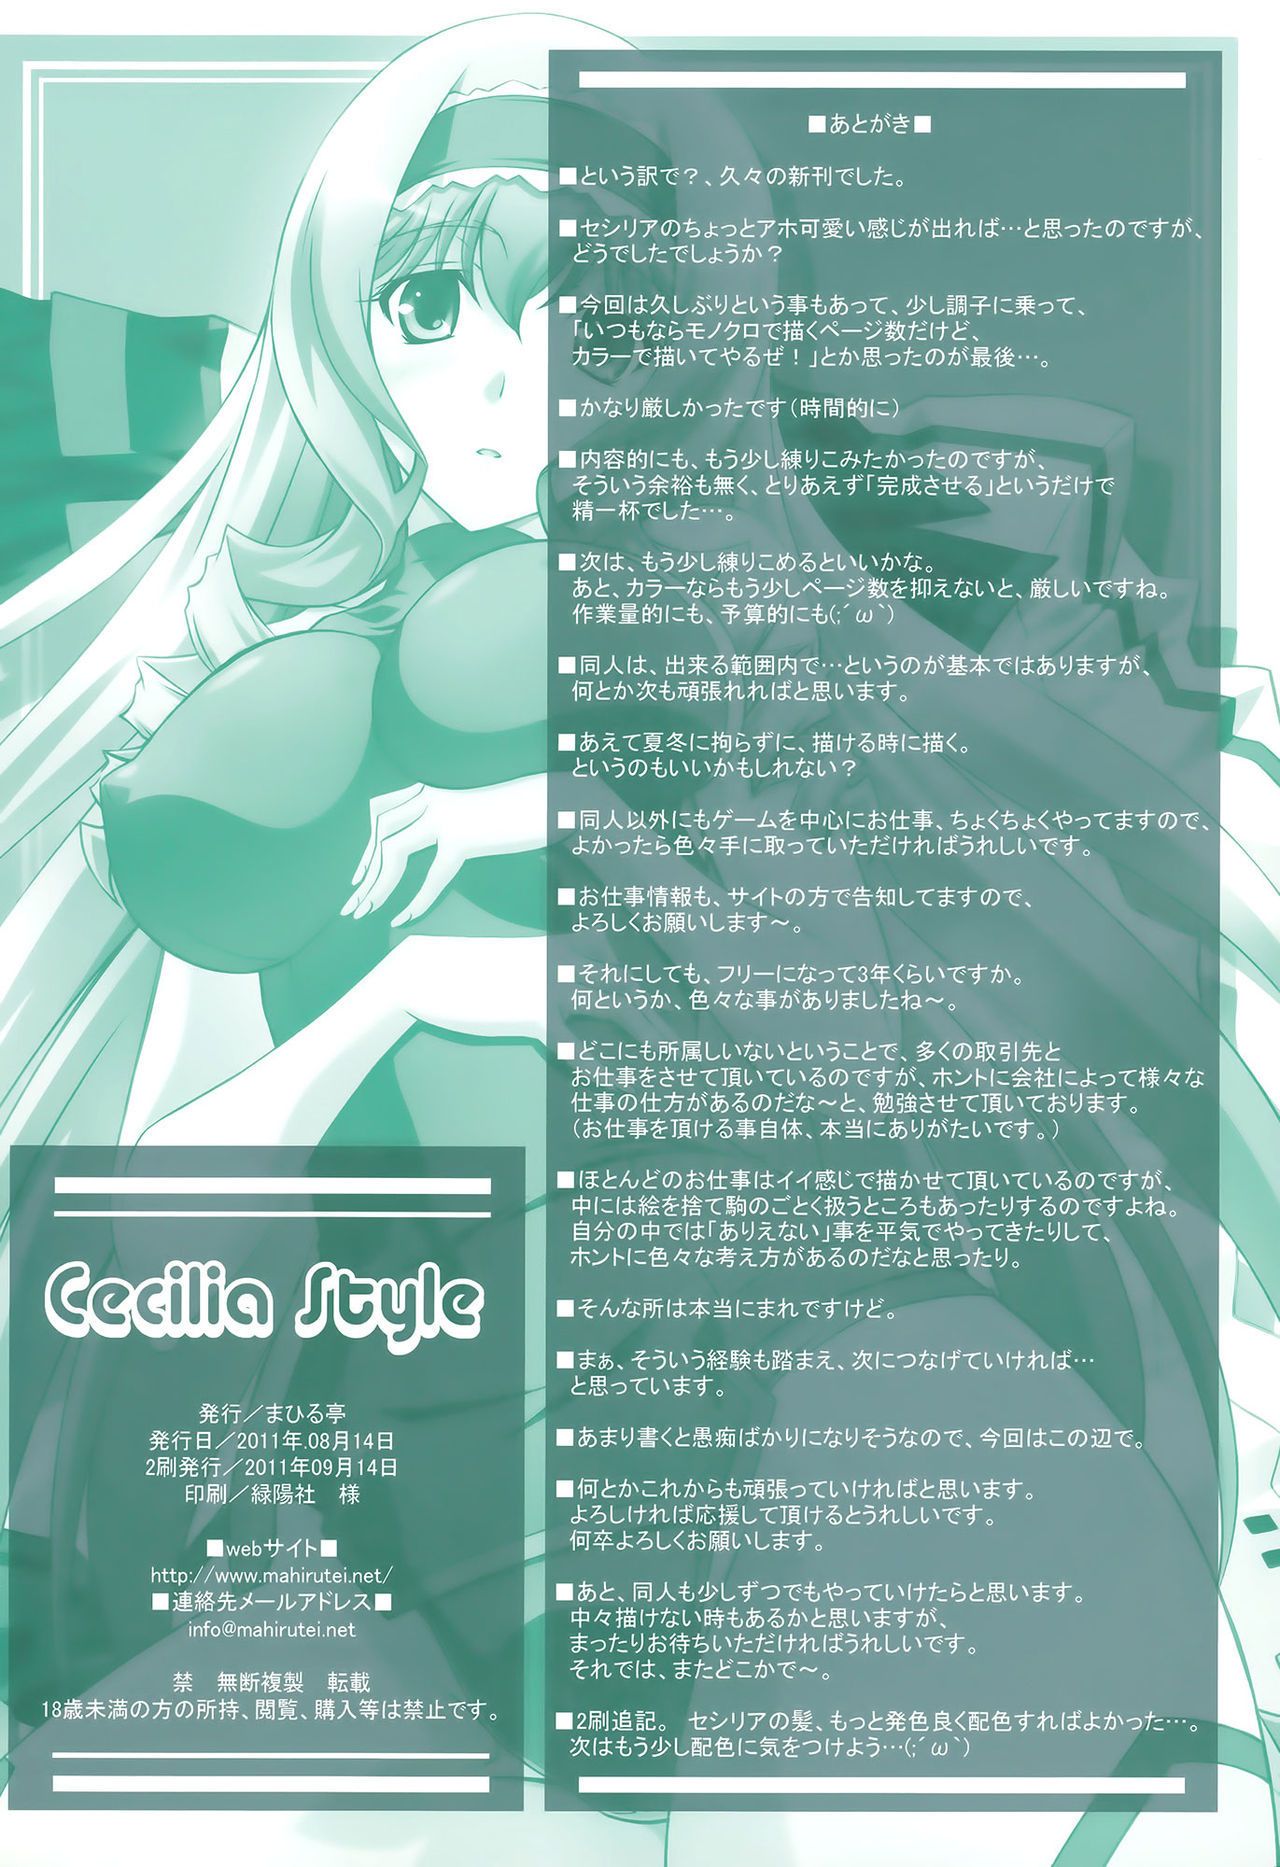 (C80) Mahirutei (Izumi Mahiru) Cecilia Style (IS ) RapidSwitch - part 2